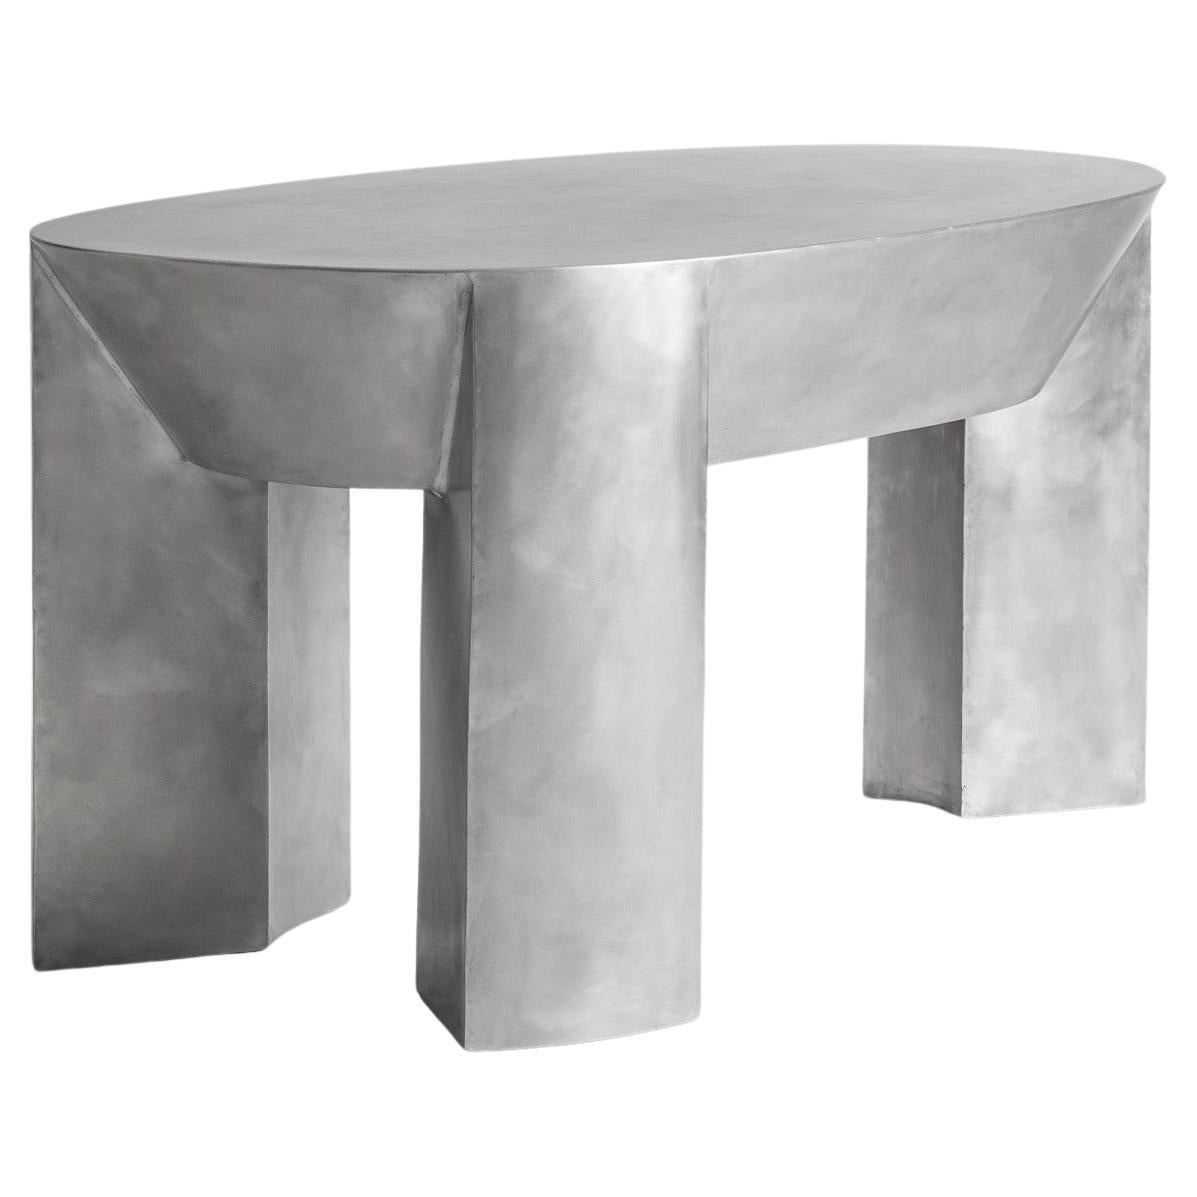 Table en aluminium de Jan Ankiersztajn  en vente